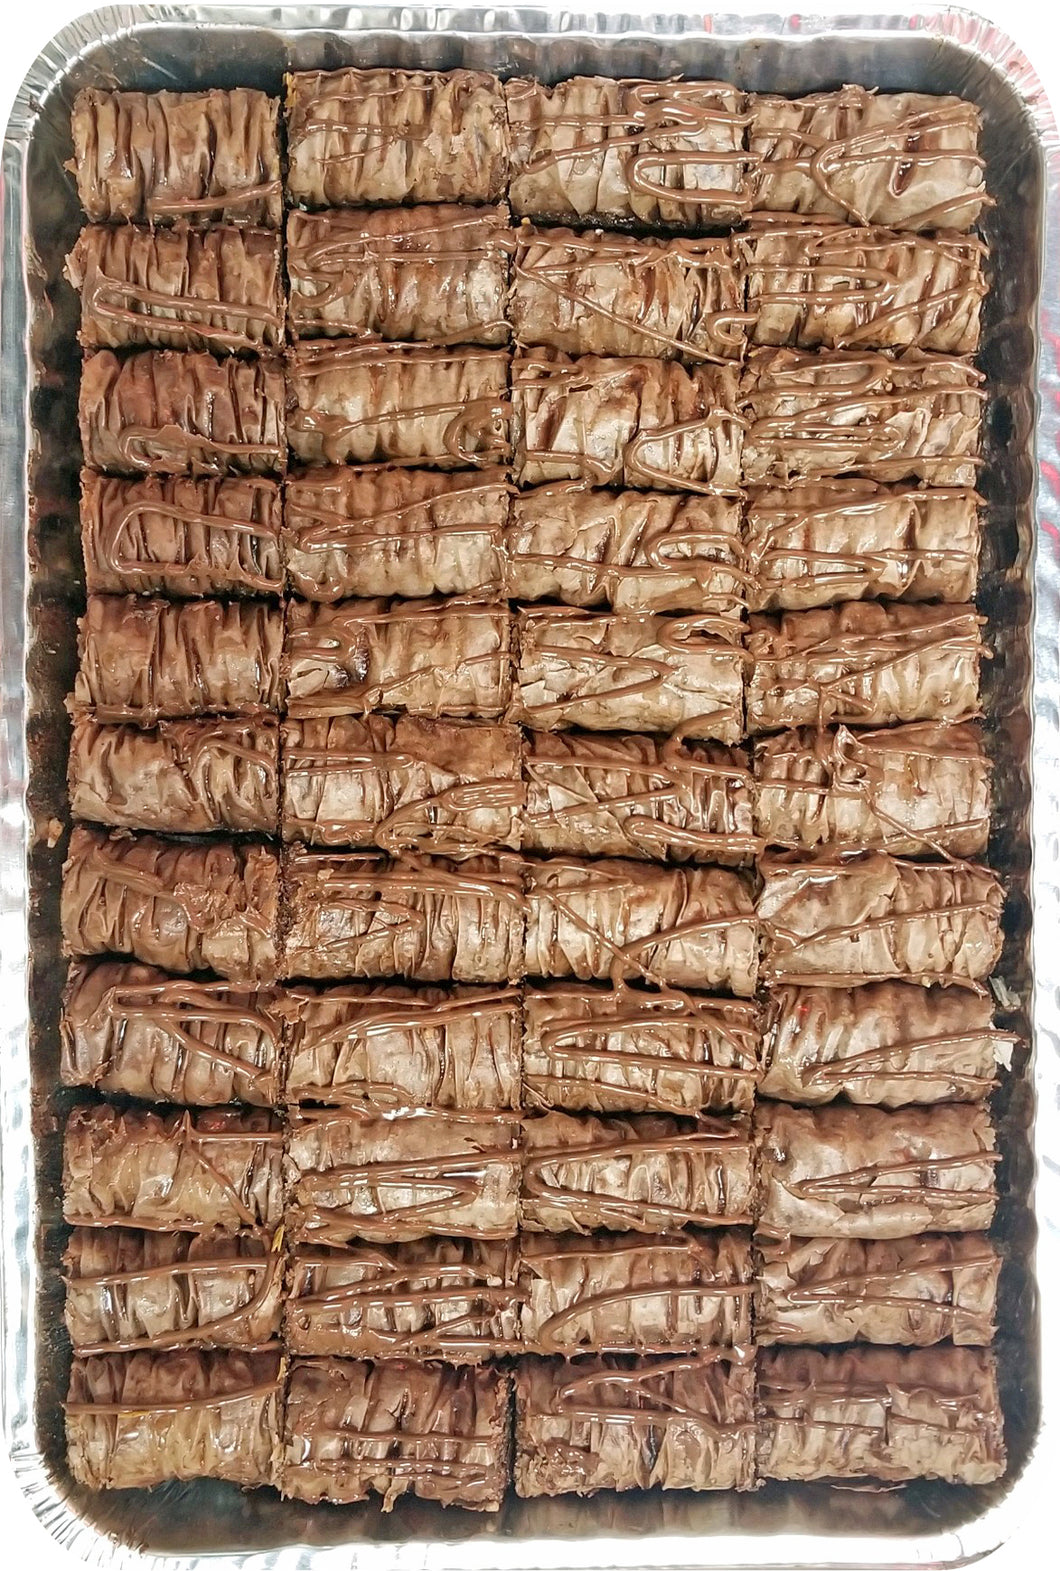 MINI FINGERS NUTELLA CHOCOLATE BAKLAVA HALF TRAY by Paris Pastry in Michigan USA